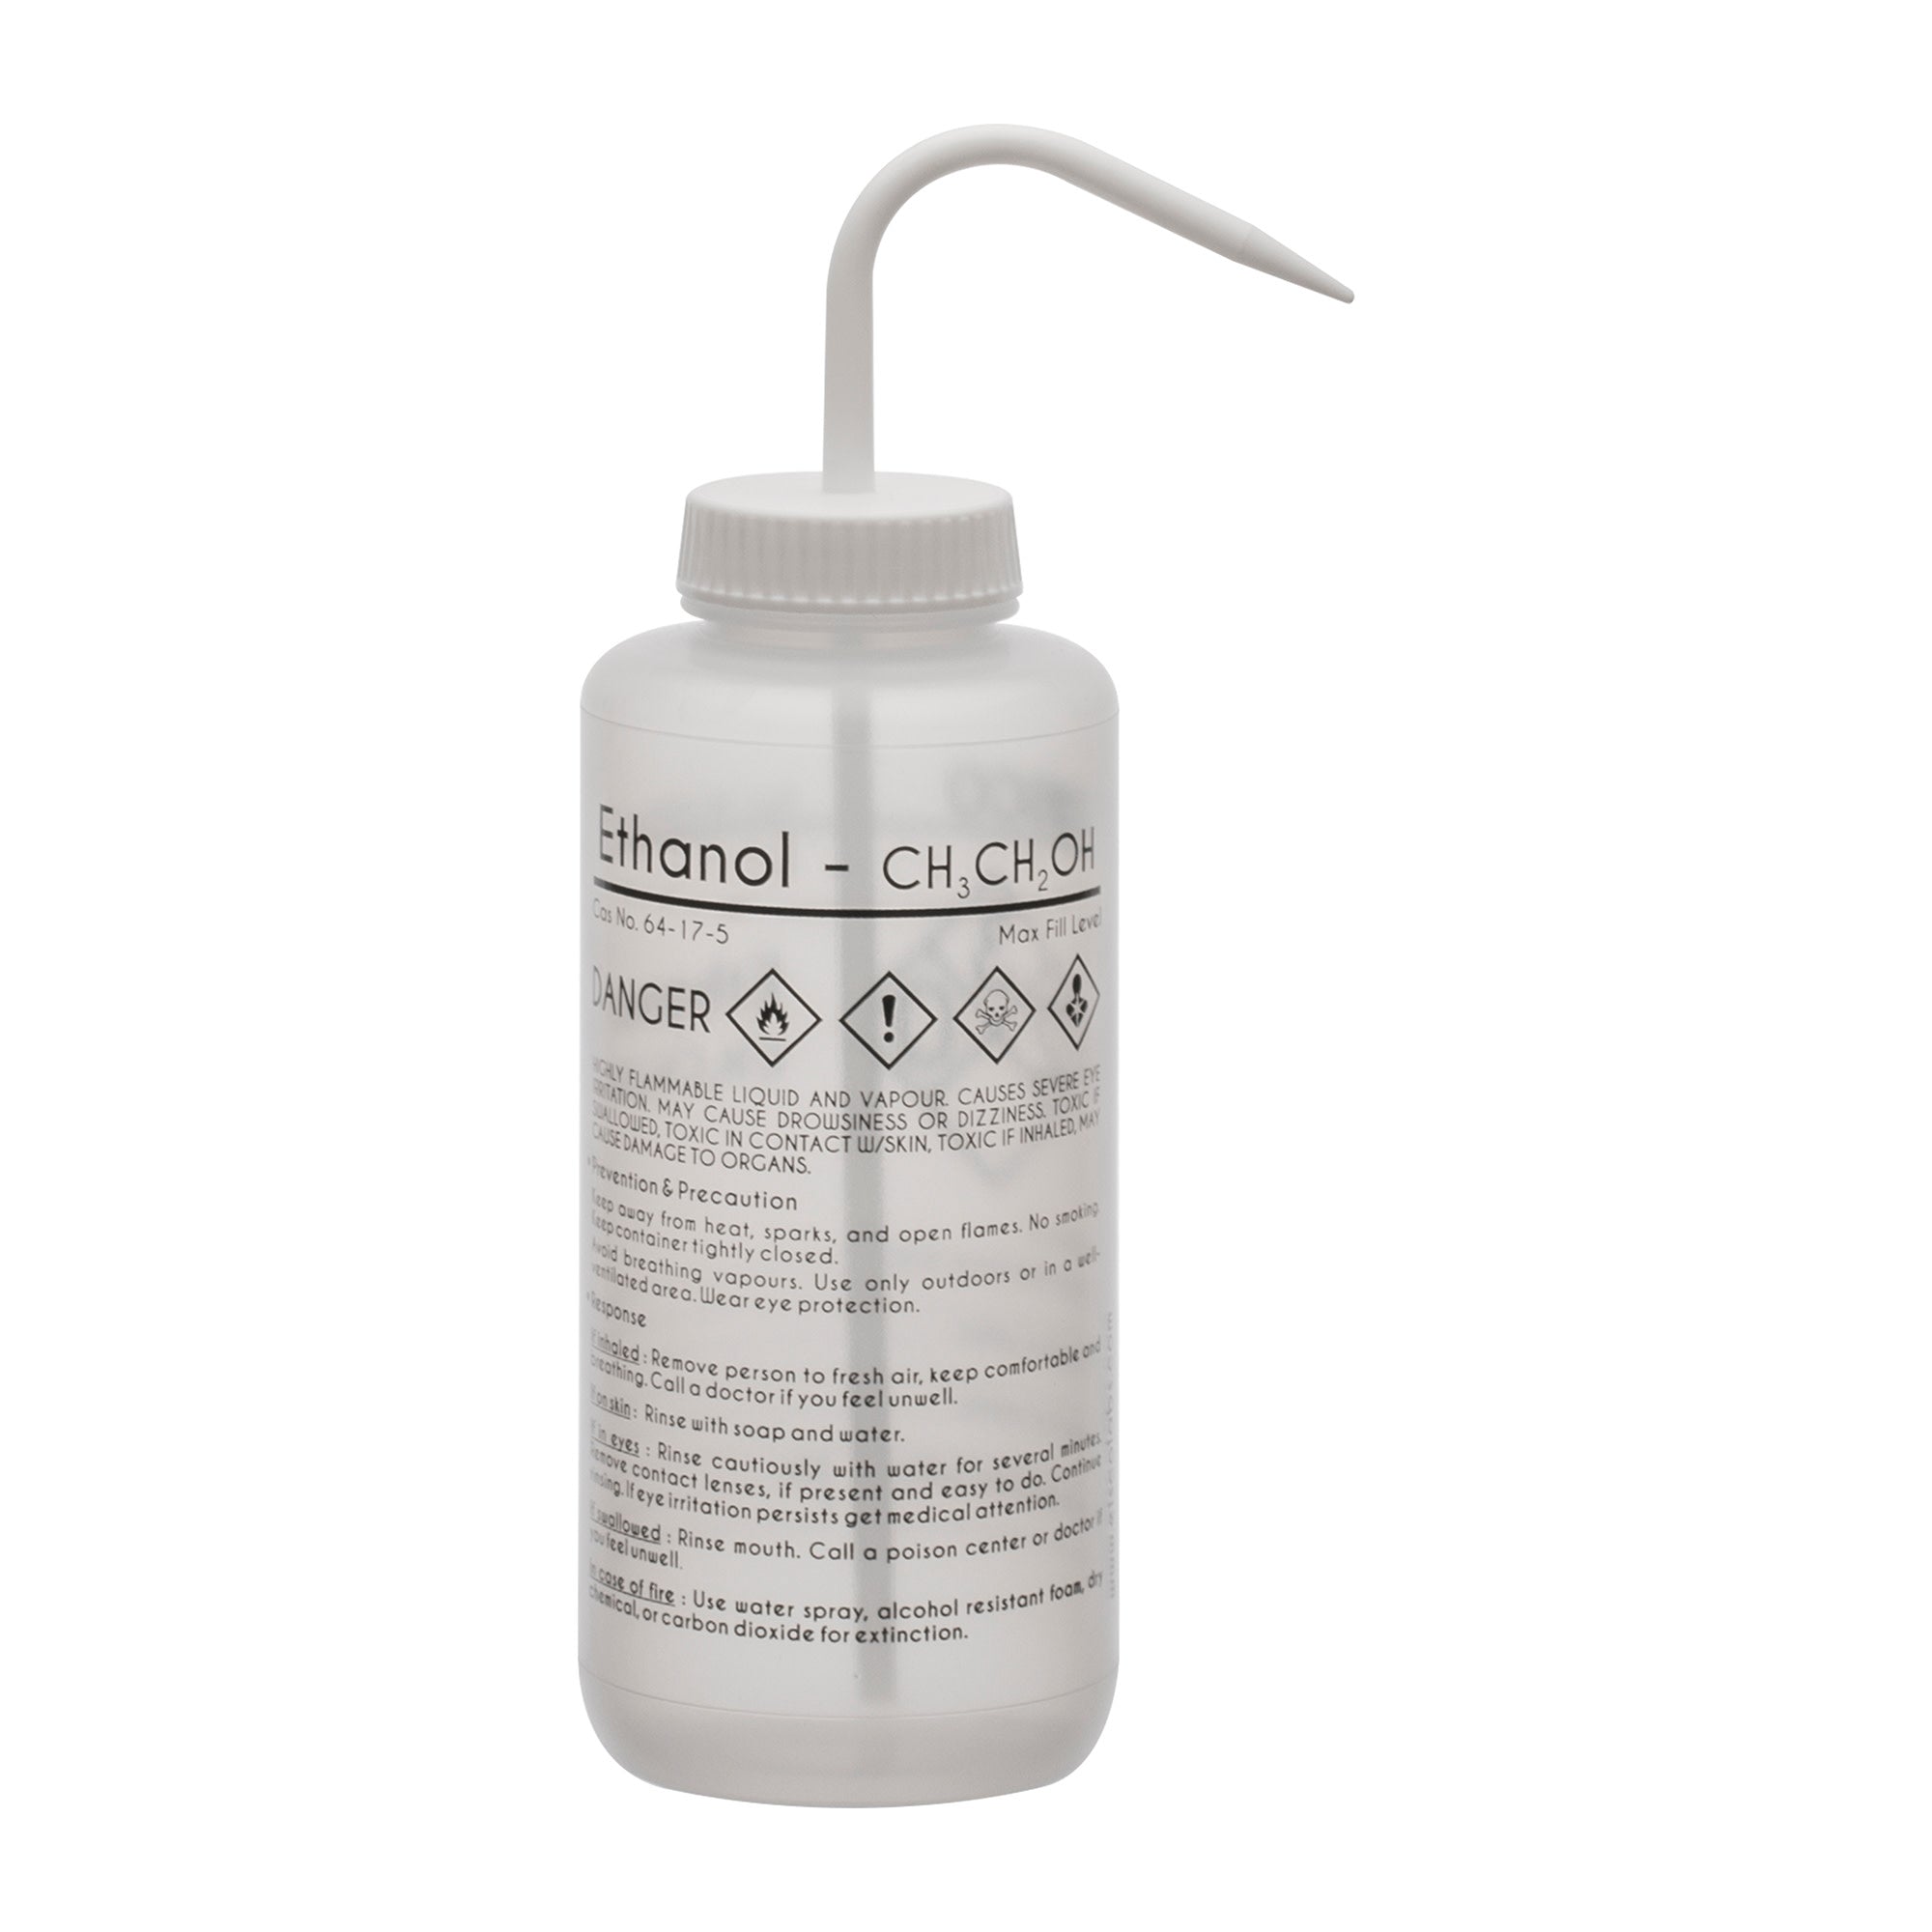 Performance Plastic Wash Bottle, Ethano, 1000 ml - Labeled (1 Color)